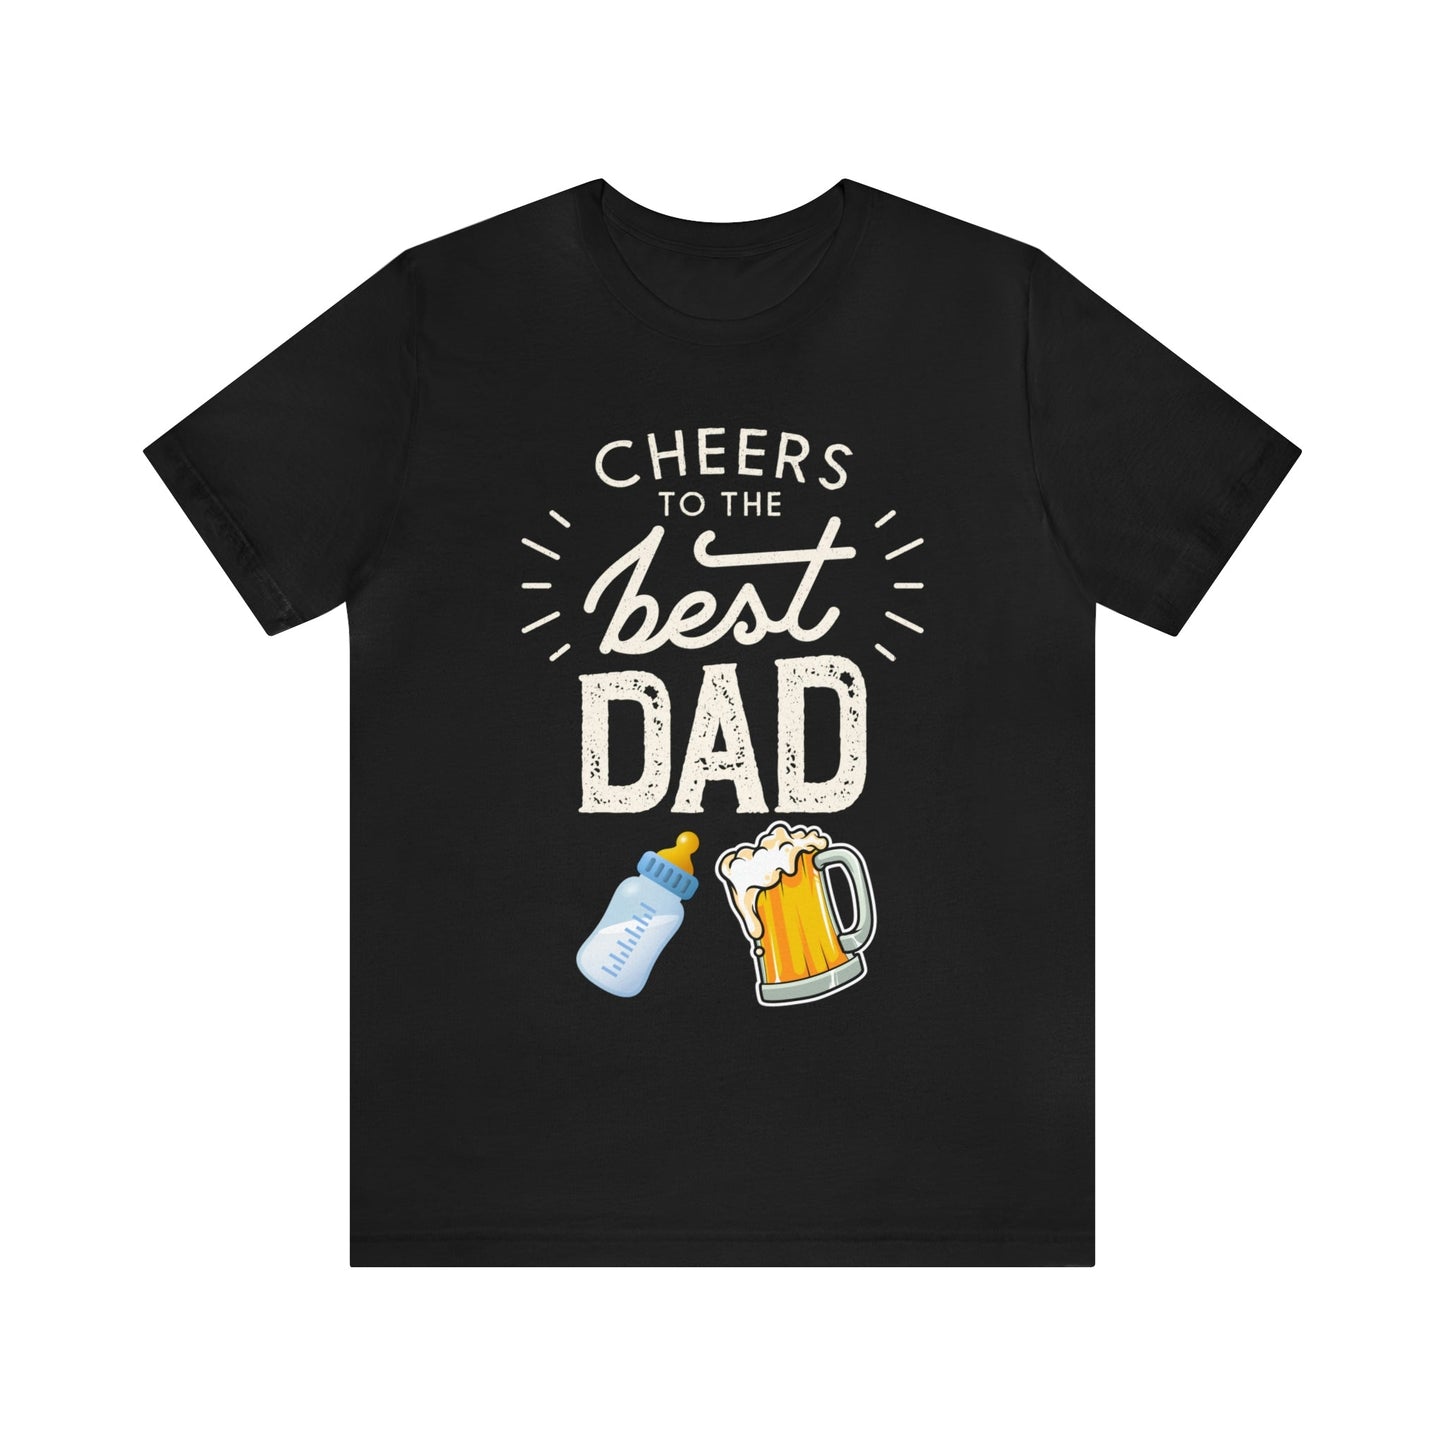 Cheers to The Best DAD T-Shirt-T-Shirt-Black-S-mysticalcherry